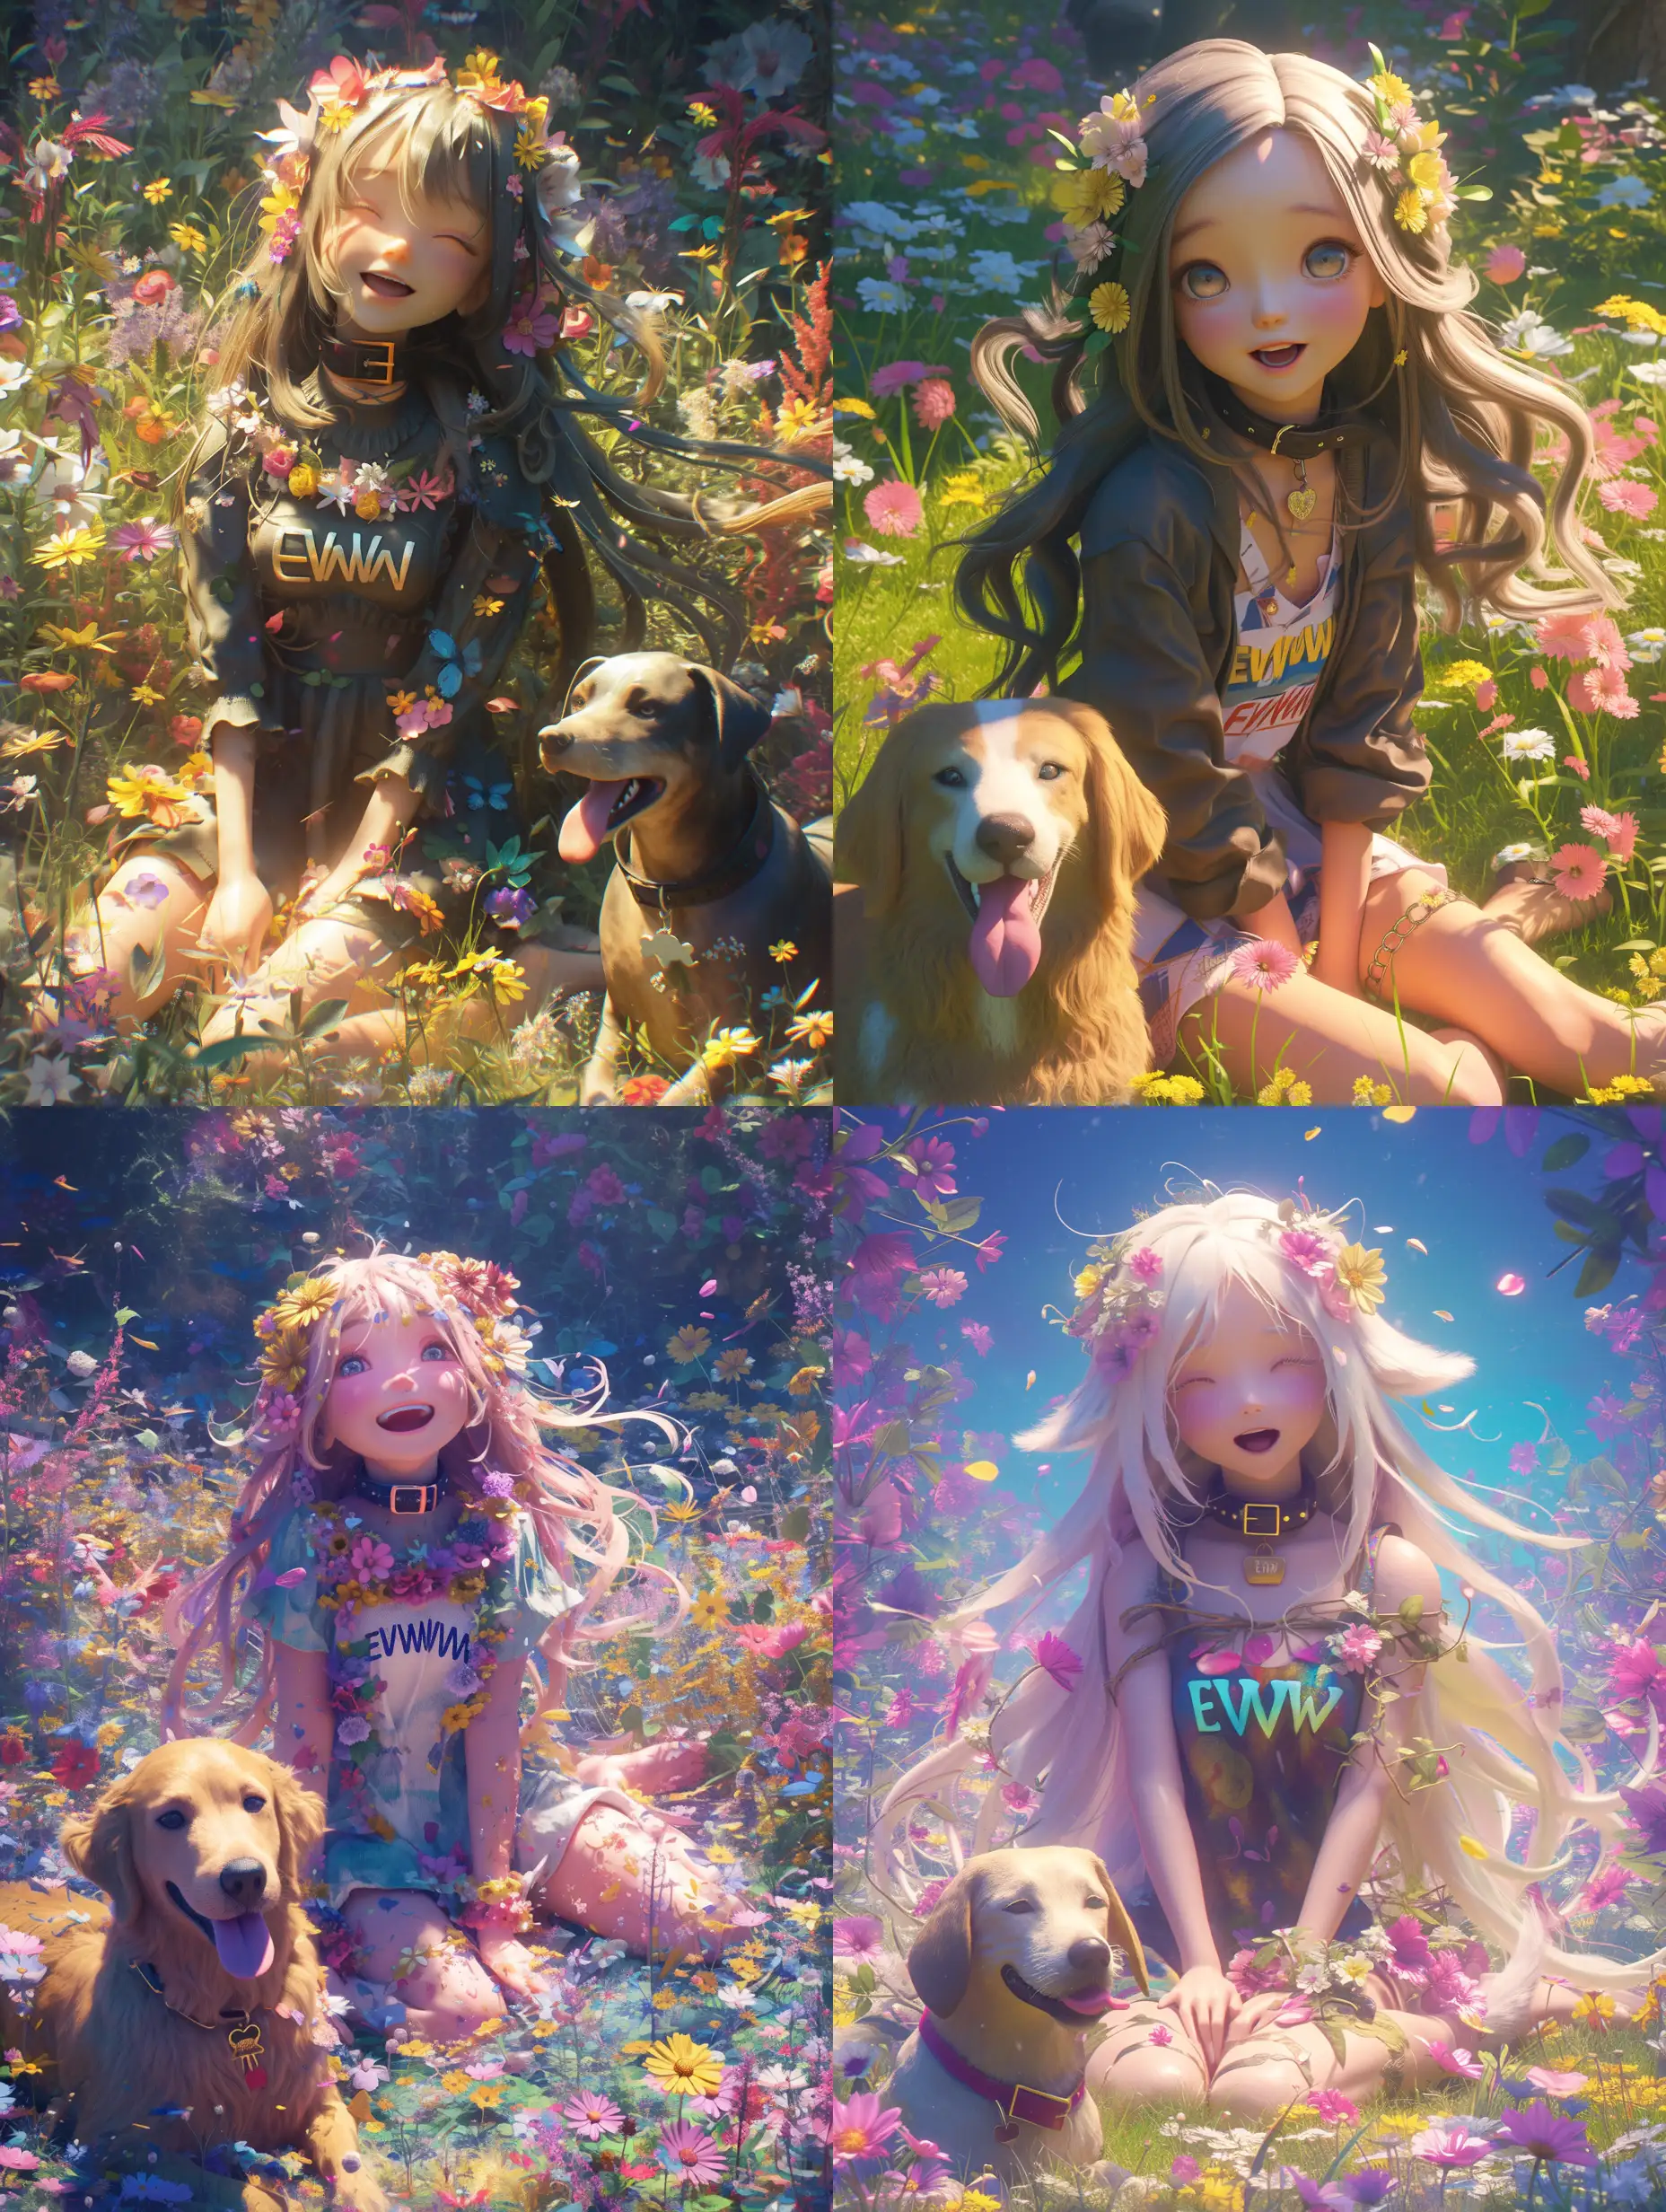 Kawaii-Anime-Girl-with-Dog-in-Flower-Field-High-Quality-CGI-VFX-Fine-Art